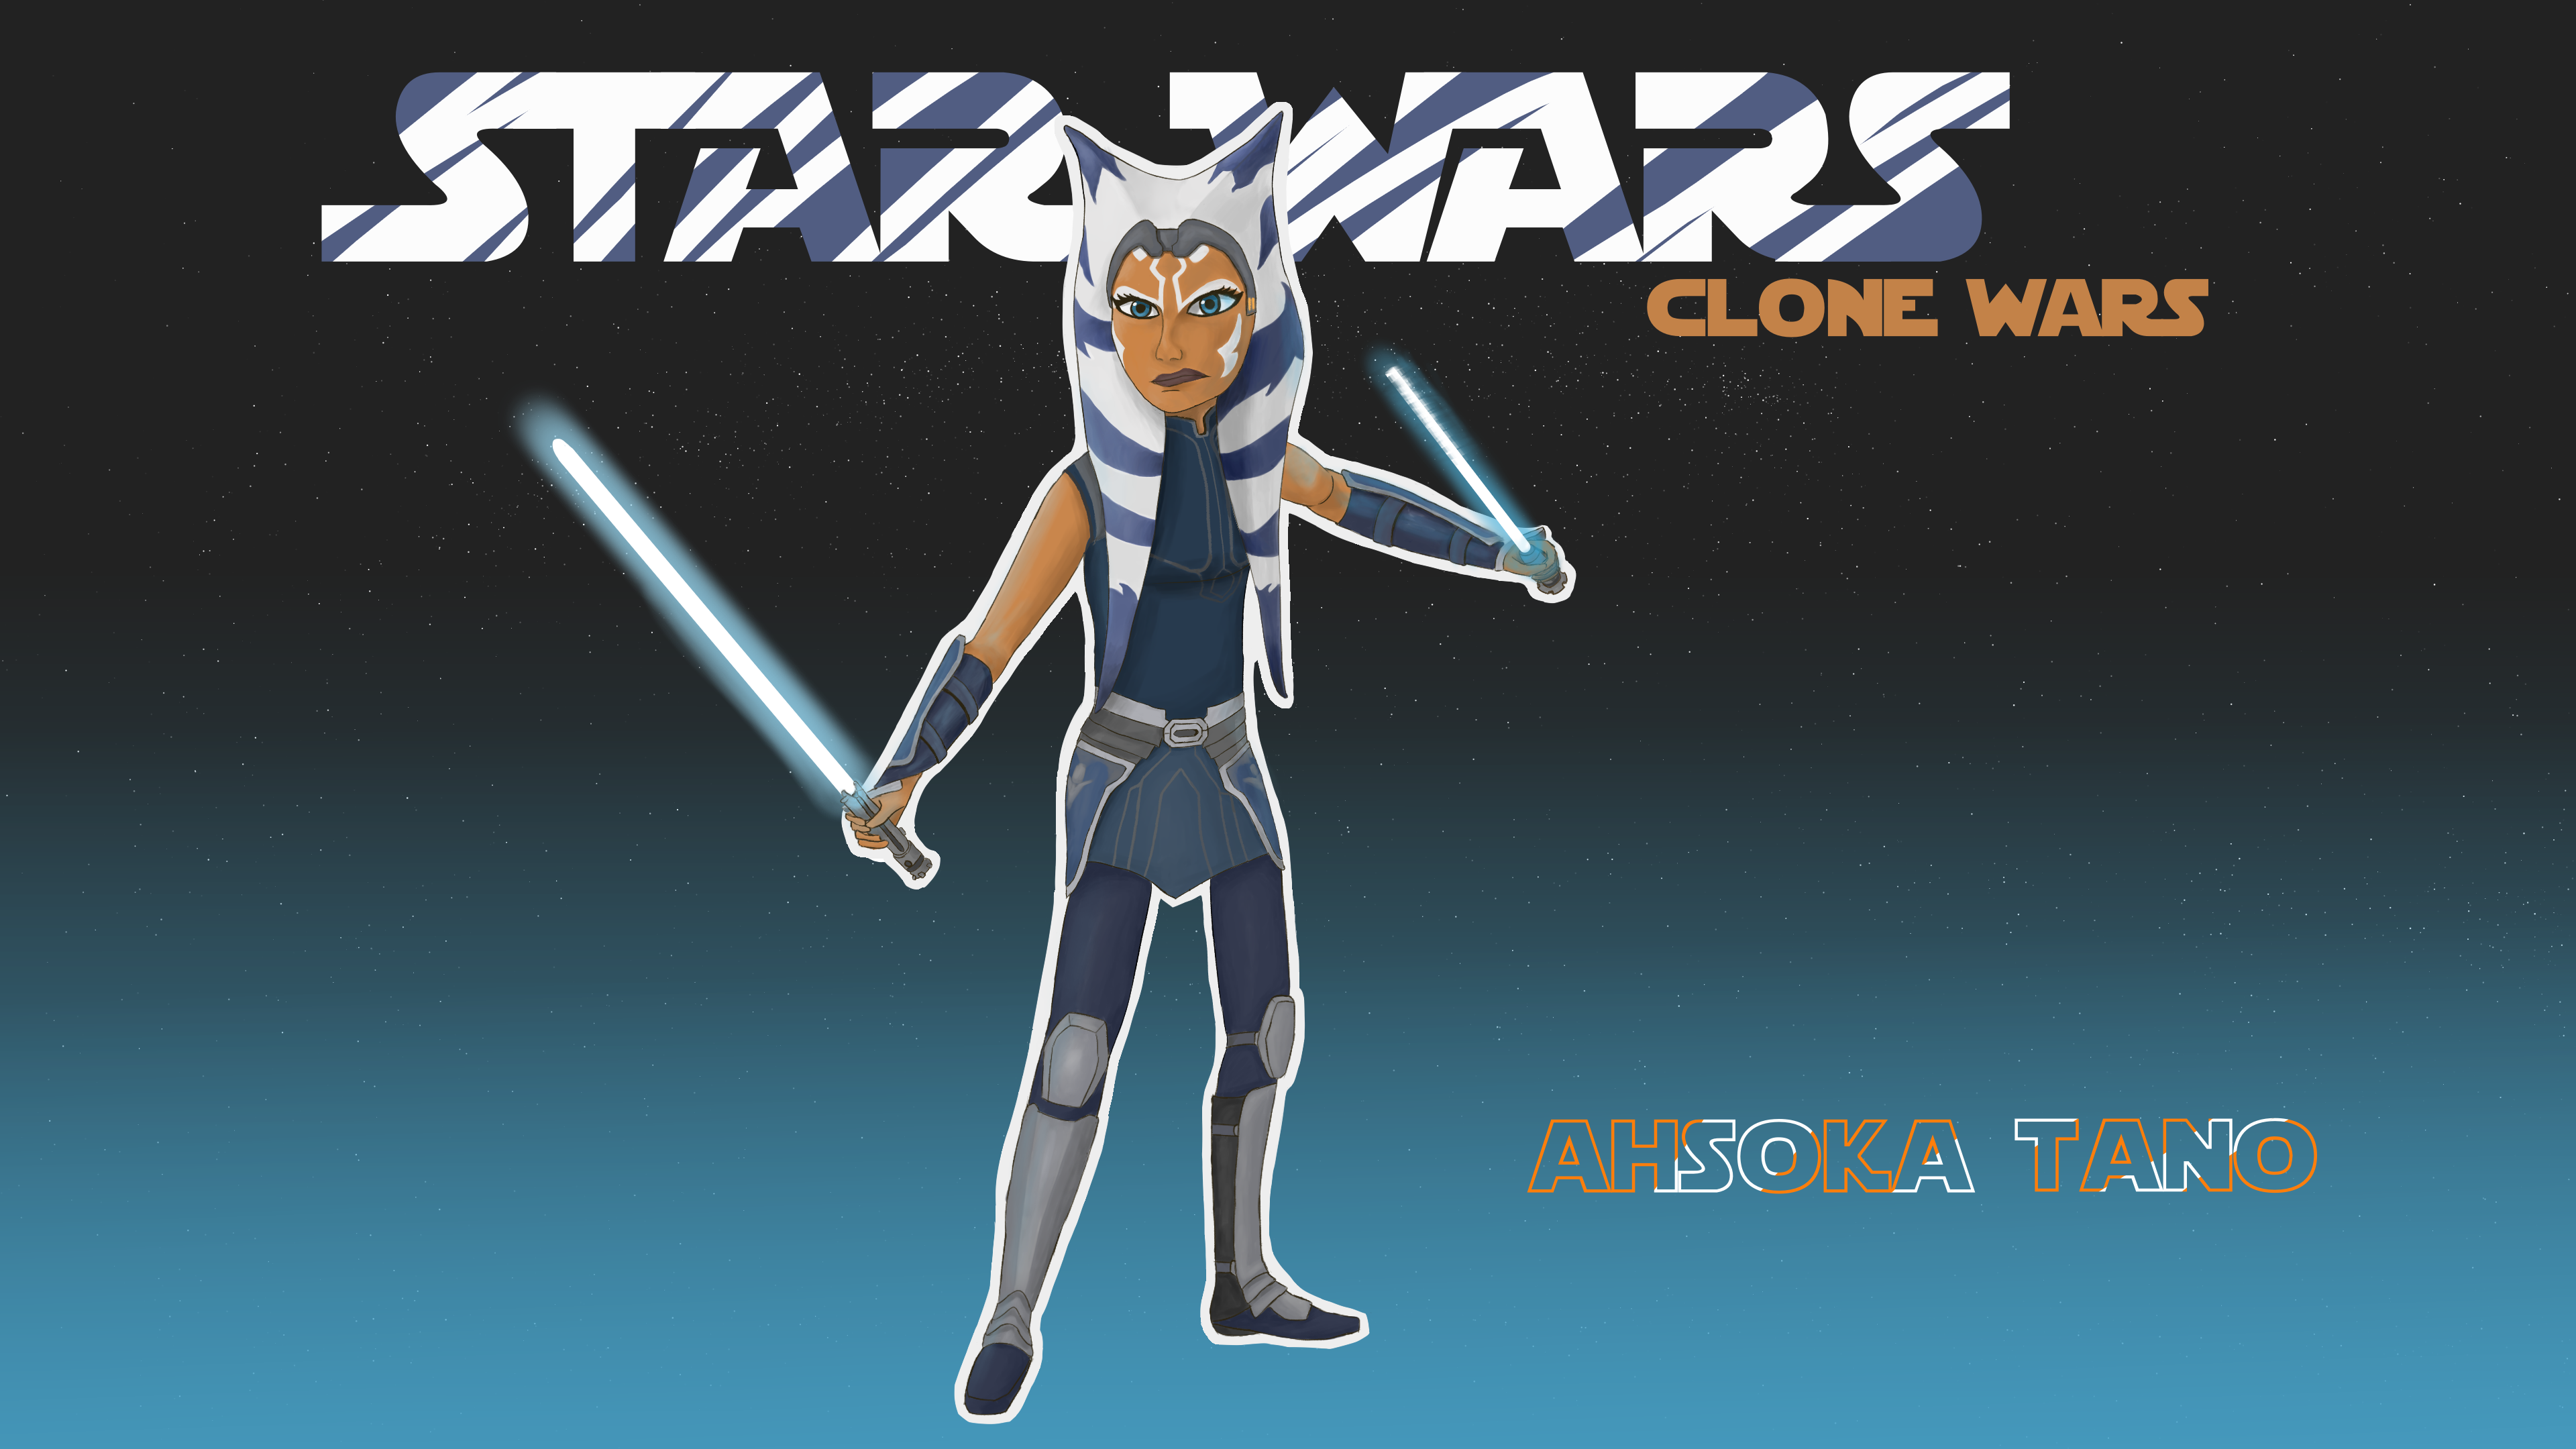 Star Wars Star Wars The Clone Wars Star Wars Rebels Ahsoka Tano Jedi Lightsaber Universe 3840x2160